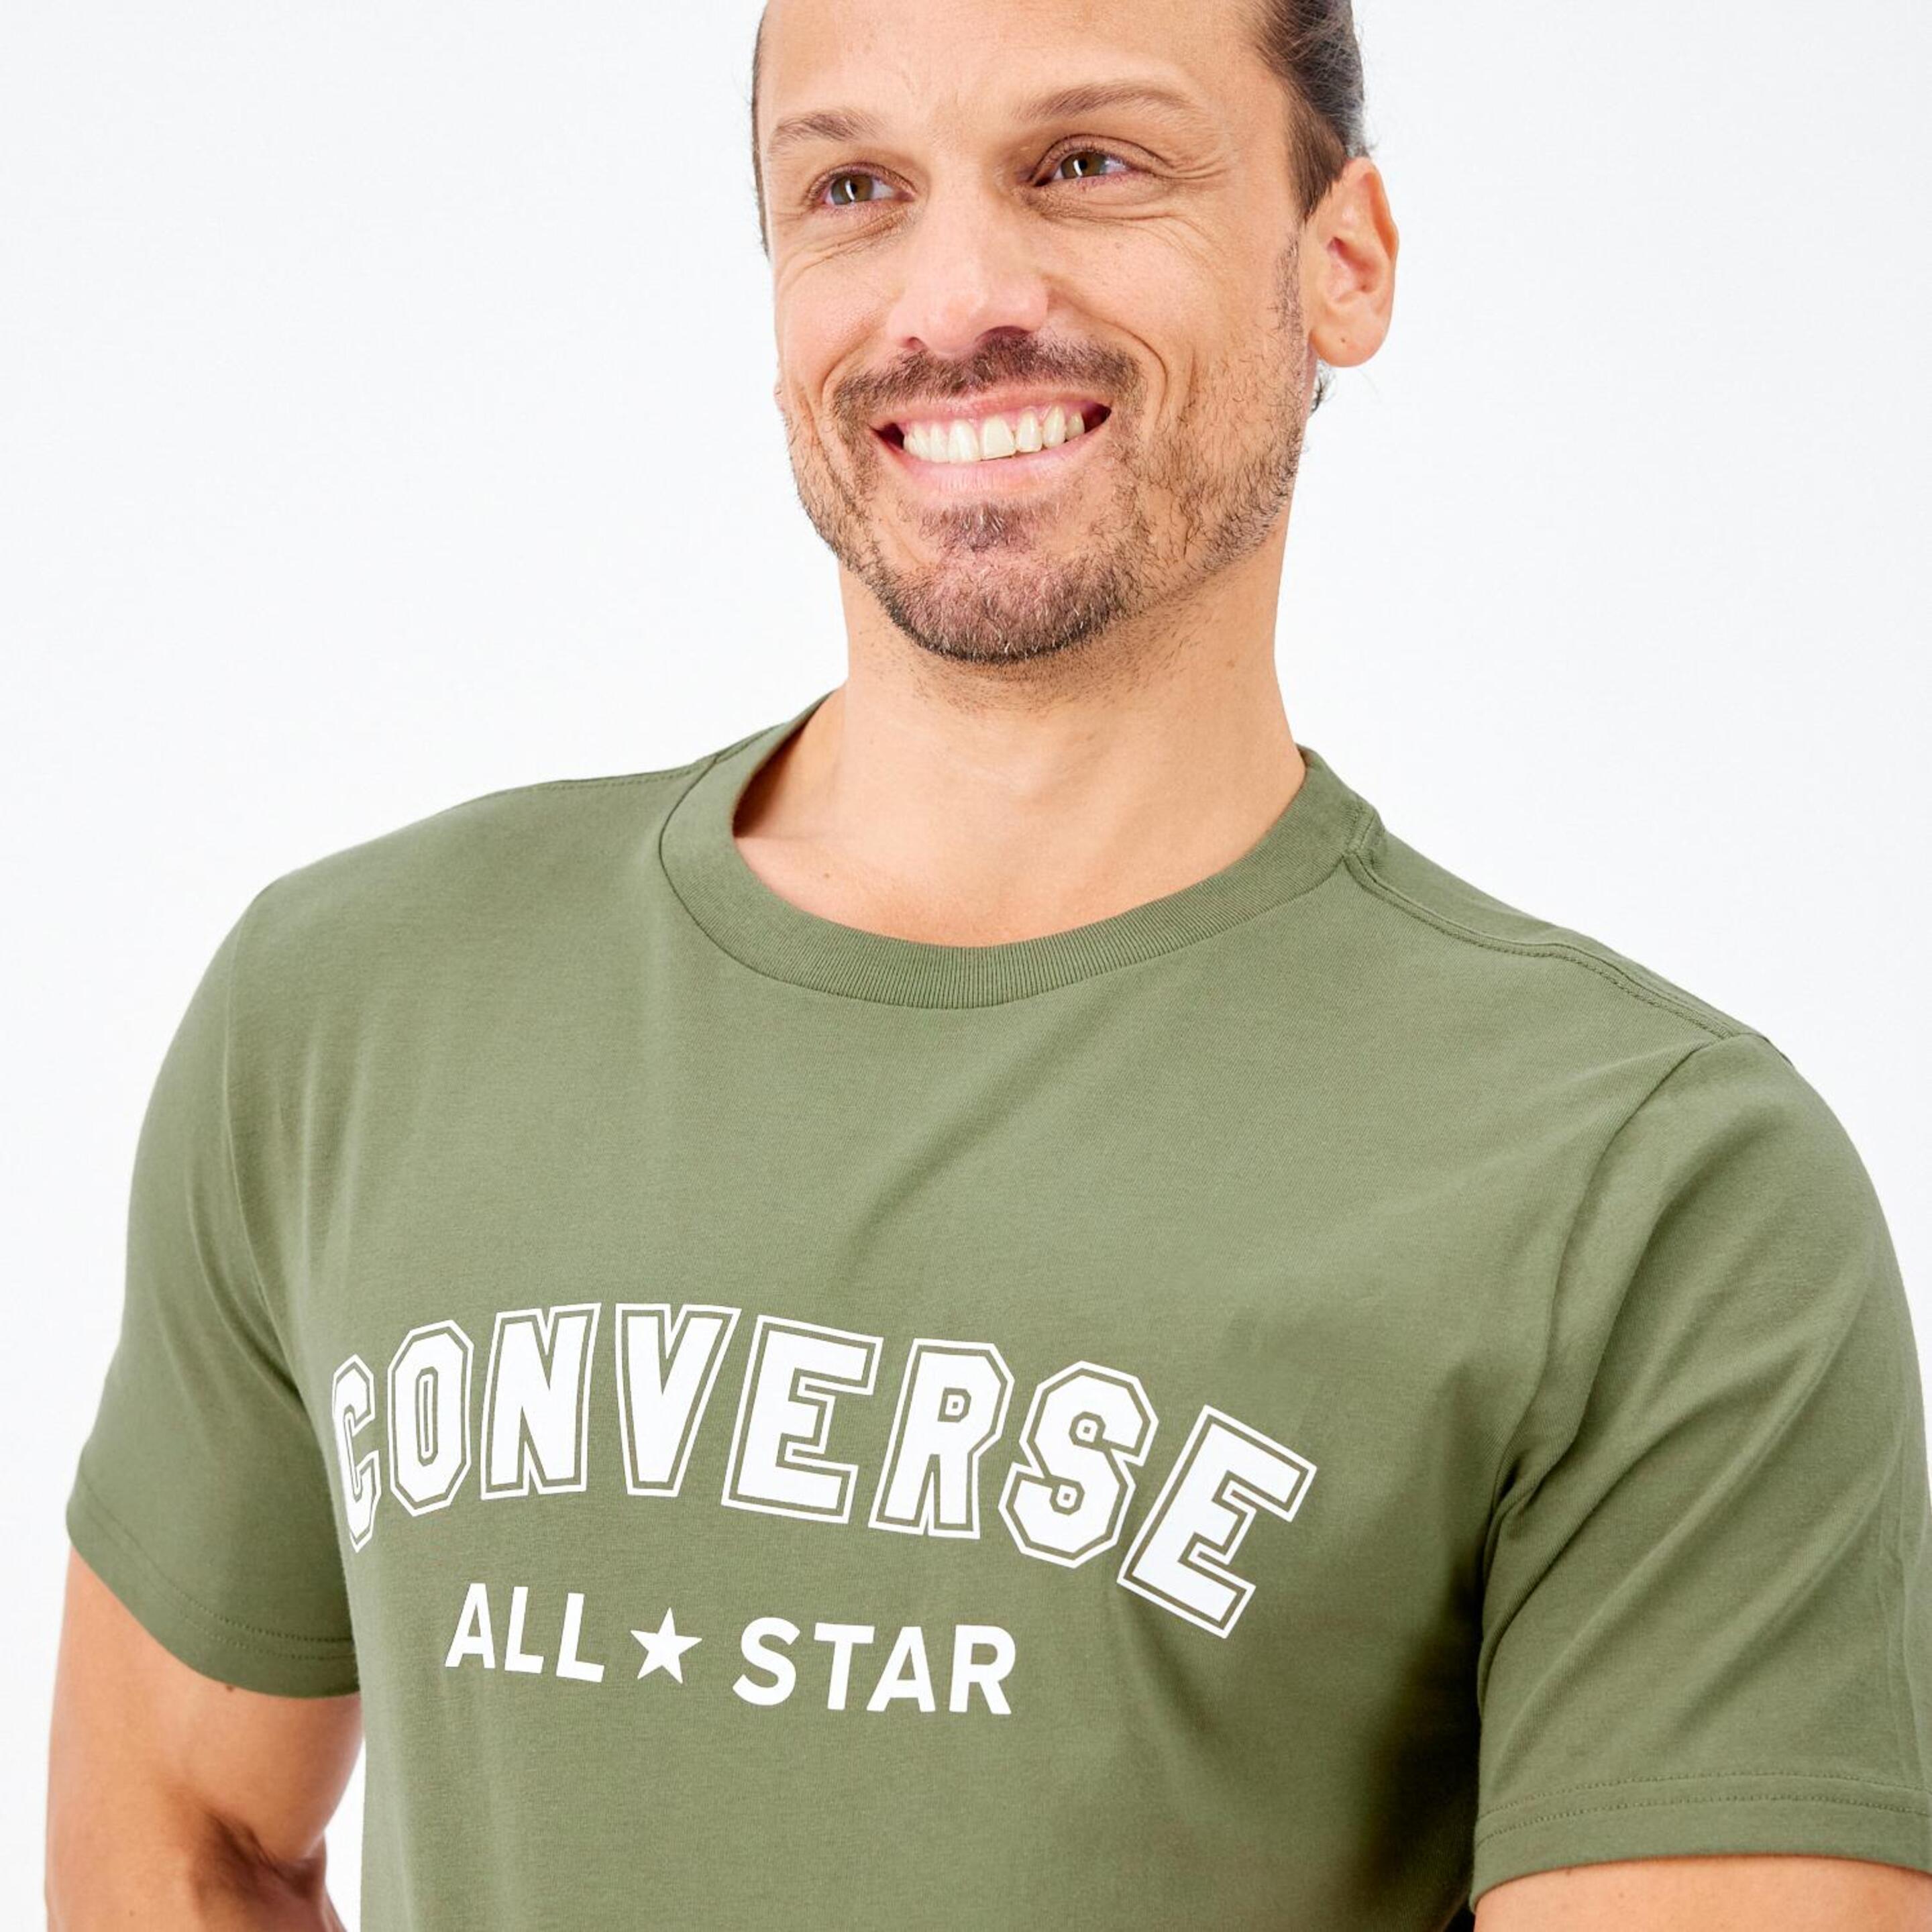 Converse All Star - Verde - Camiseta Hombre